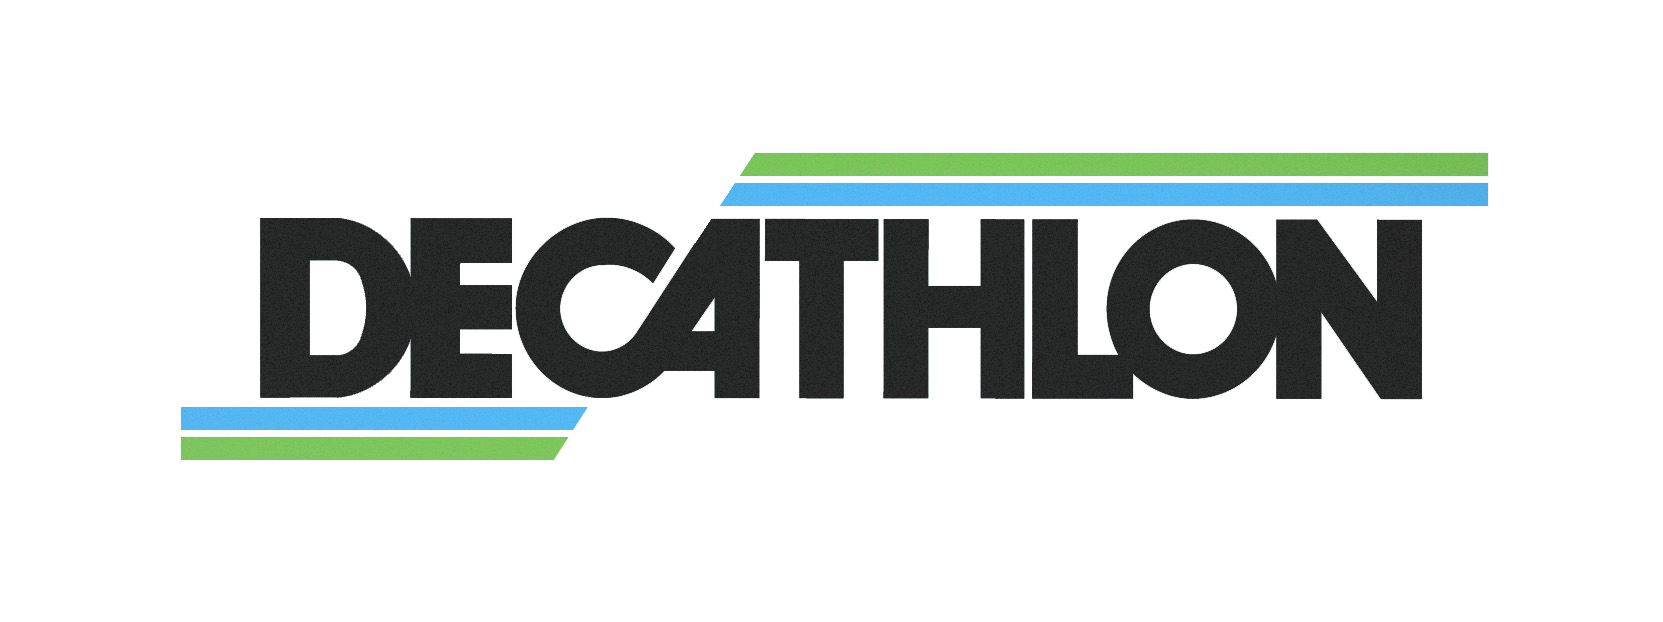 decathlon-logo-1979